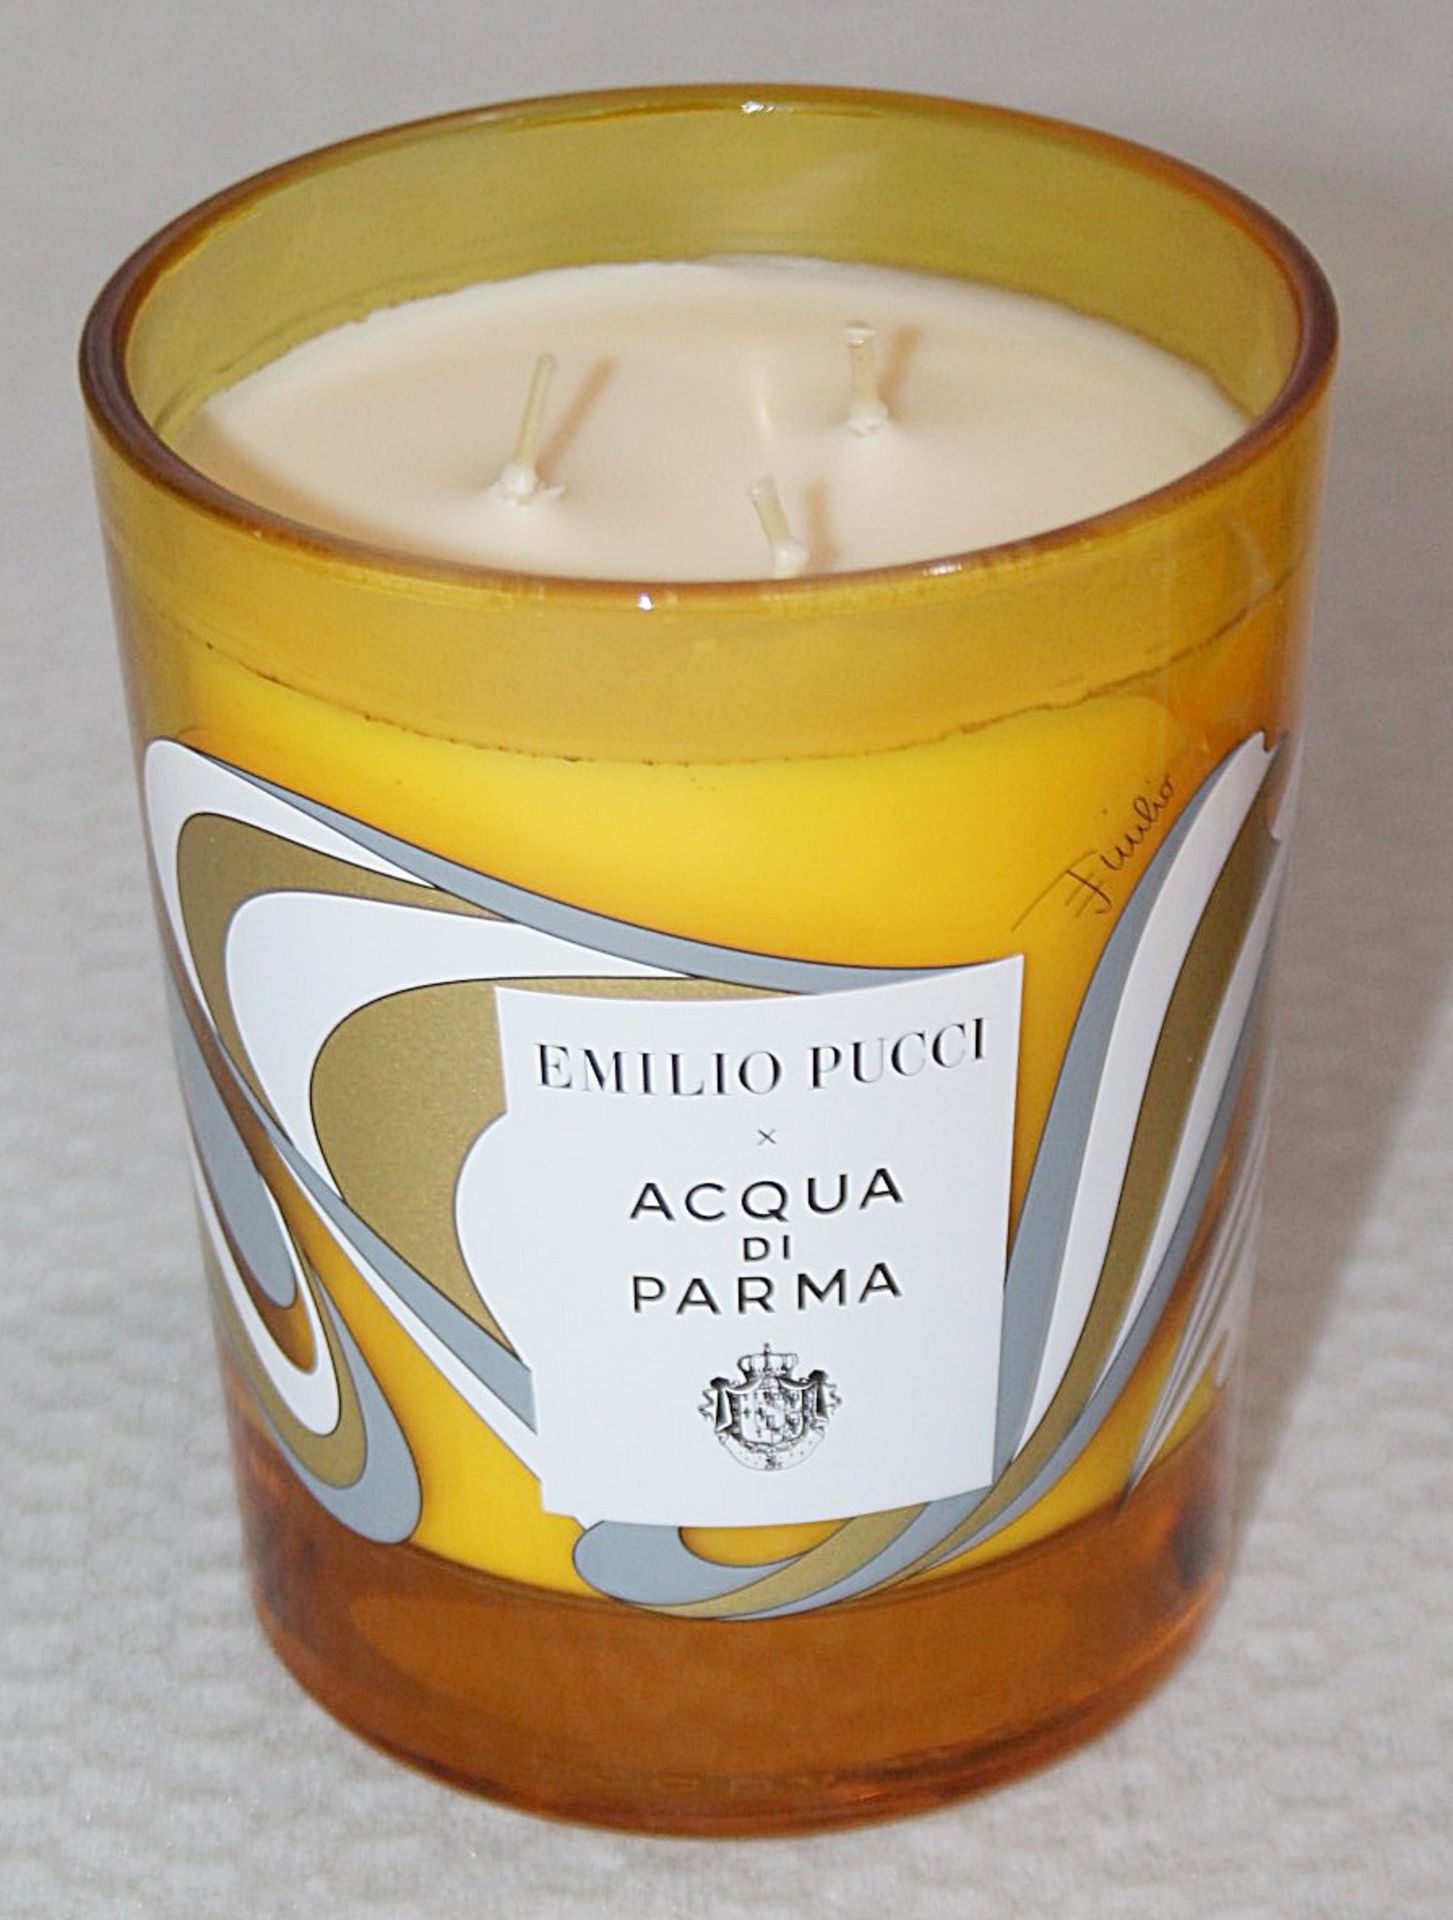 1 x EMILIO PUCCI x ACQUA DI PARMA 'Notte Di Stelle' Scented Candle (500g) - Original Price £215.86 - Image 8 of 11